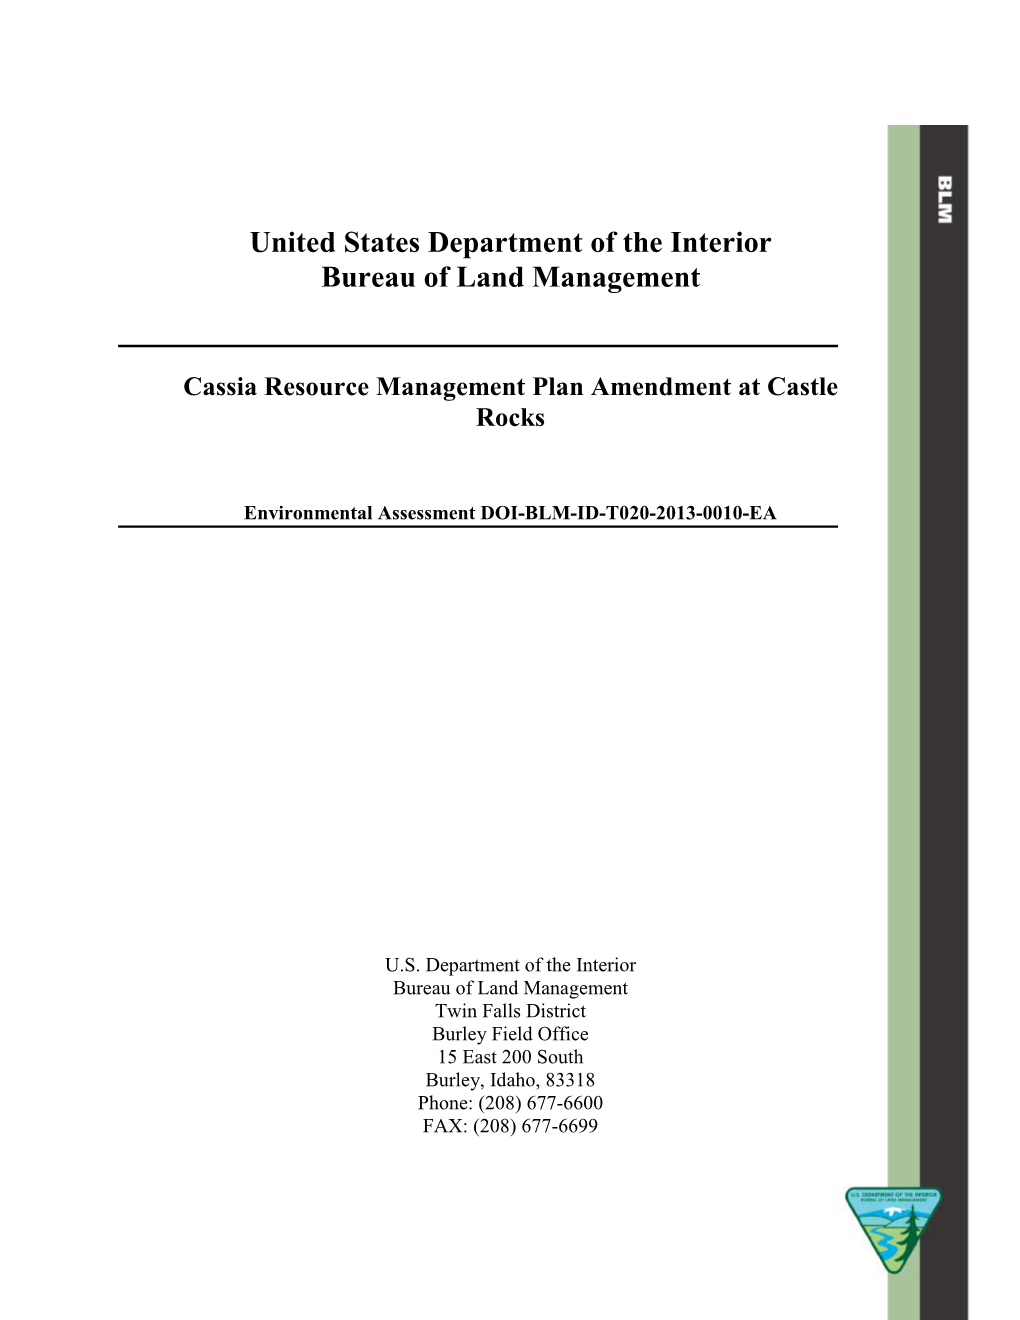 Cassia Resource Management Plan Amendment of Castle Rock EA